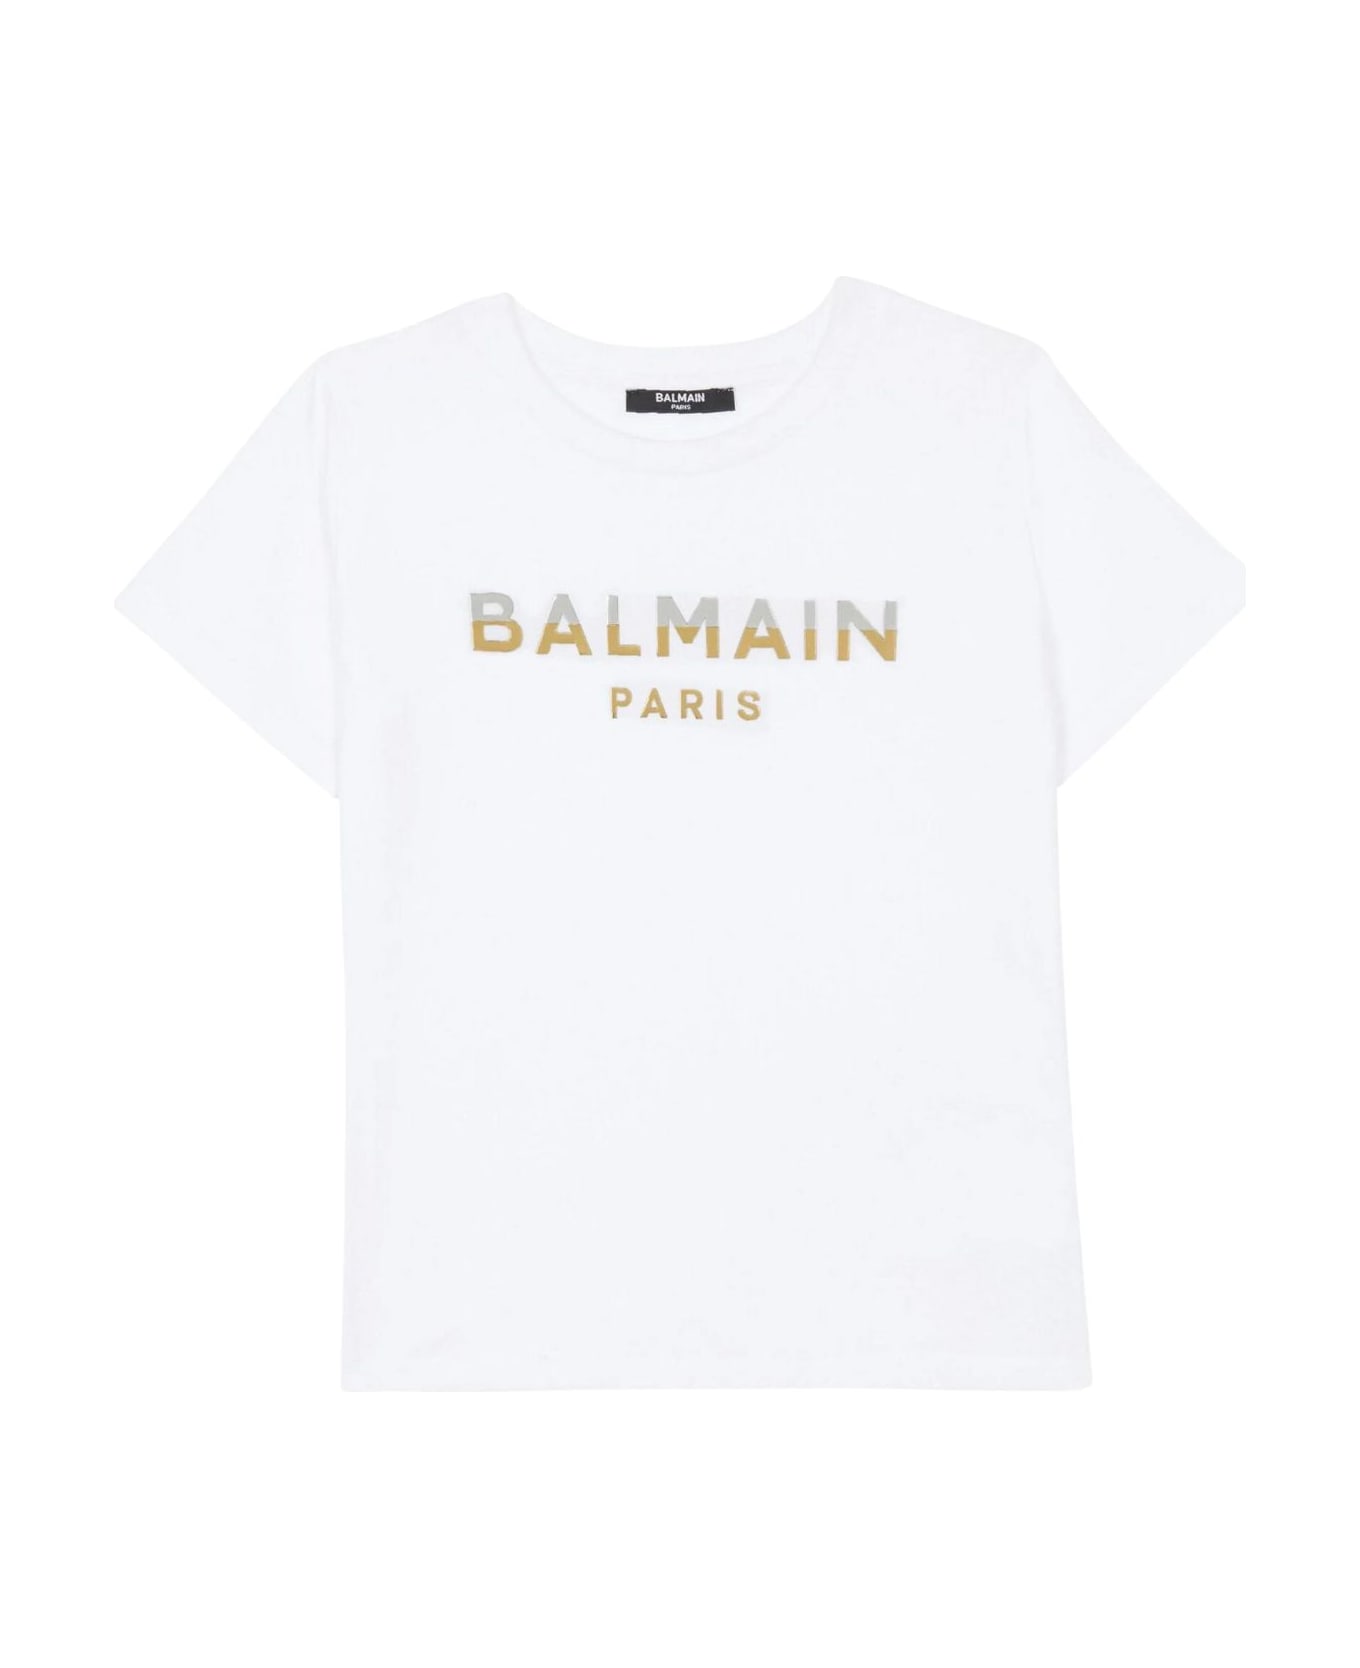 Balmain T Shirt - White